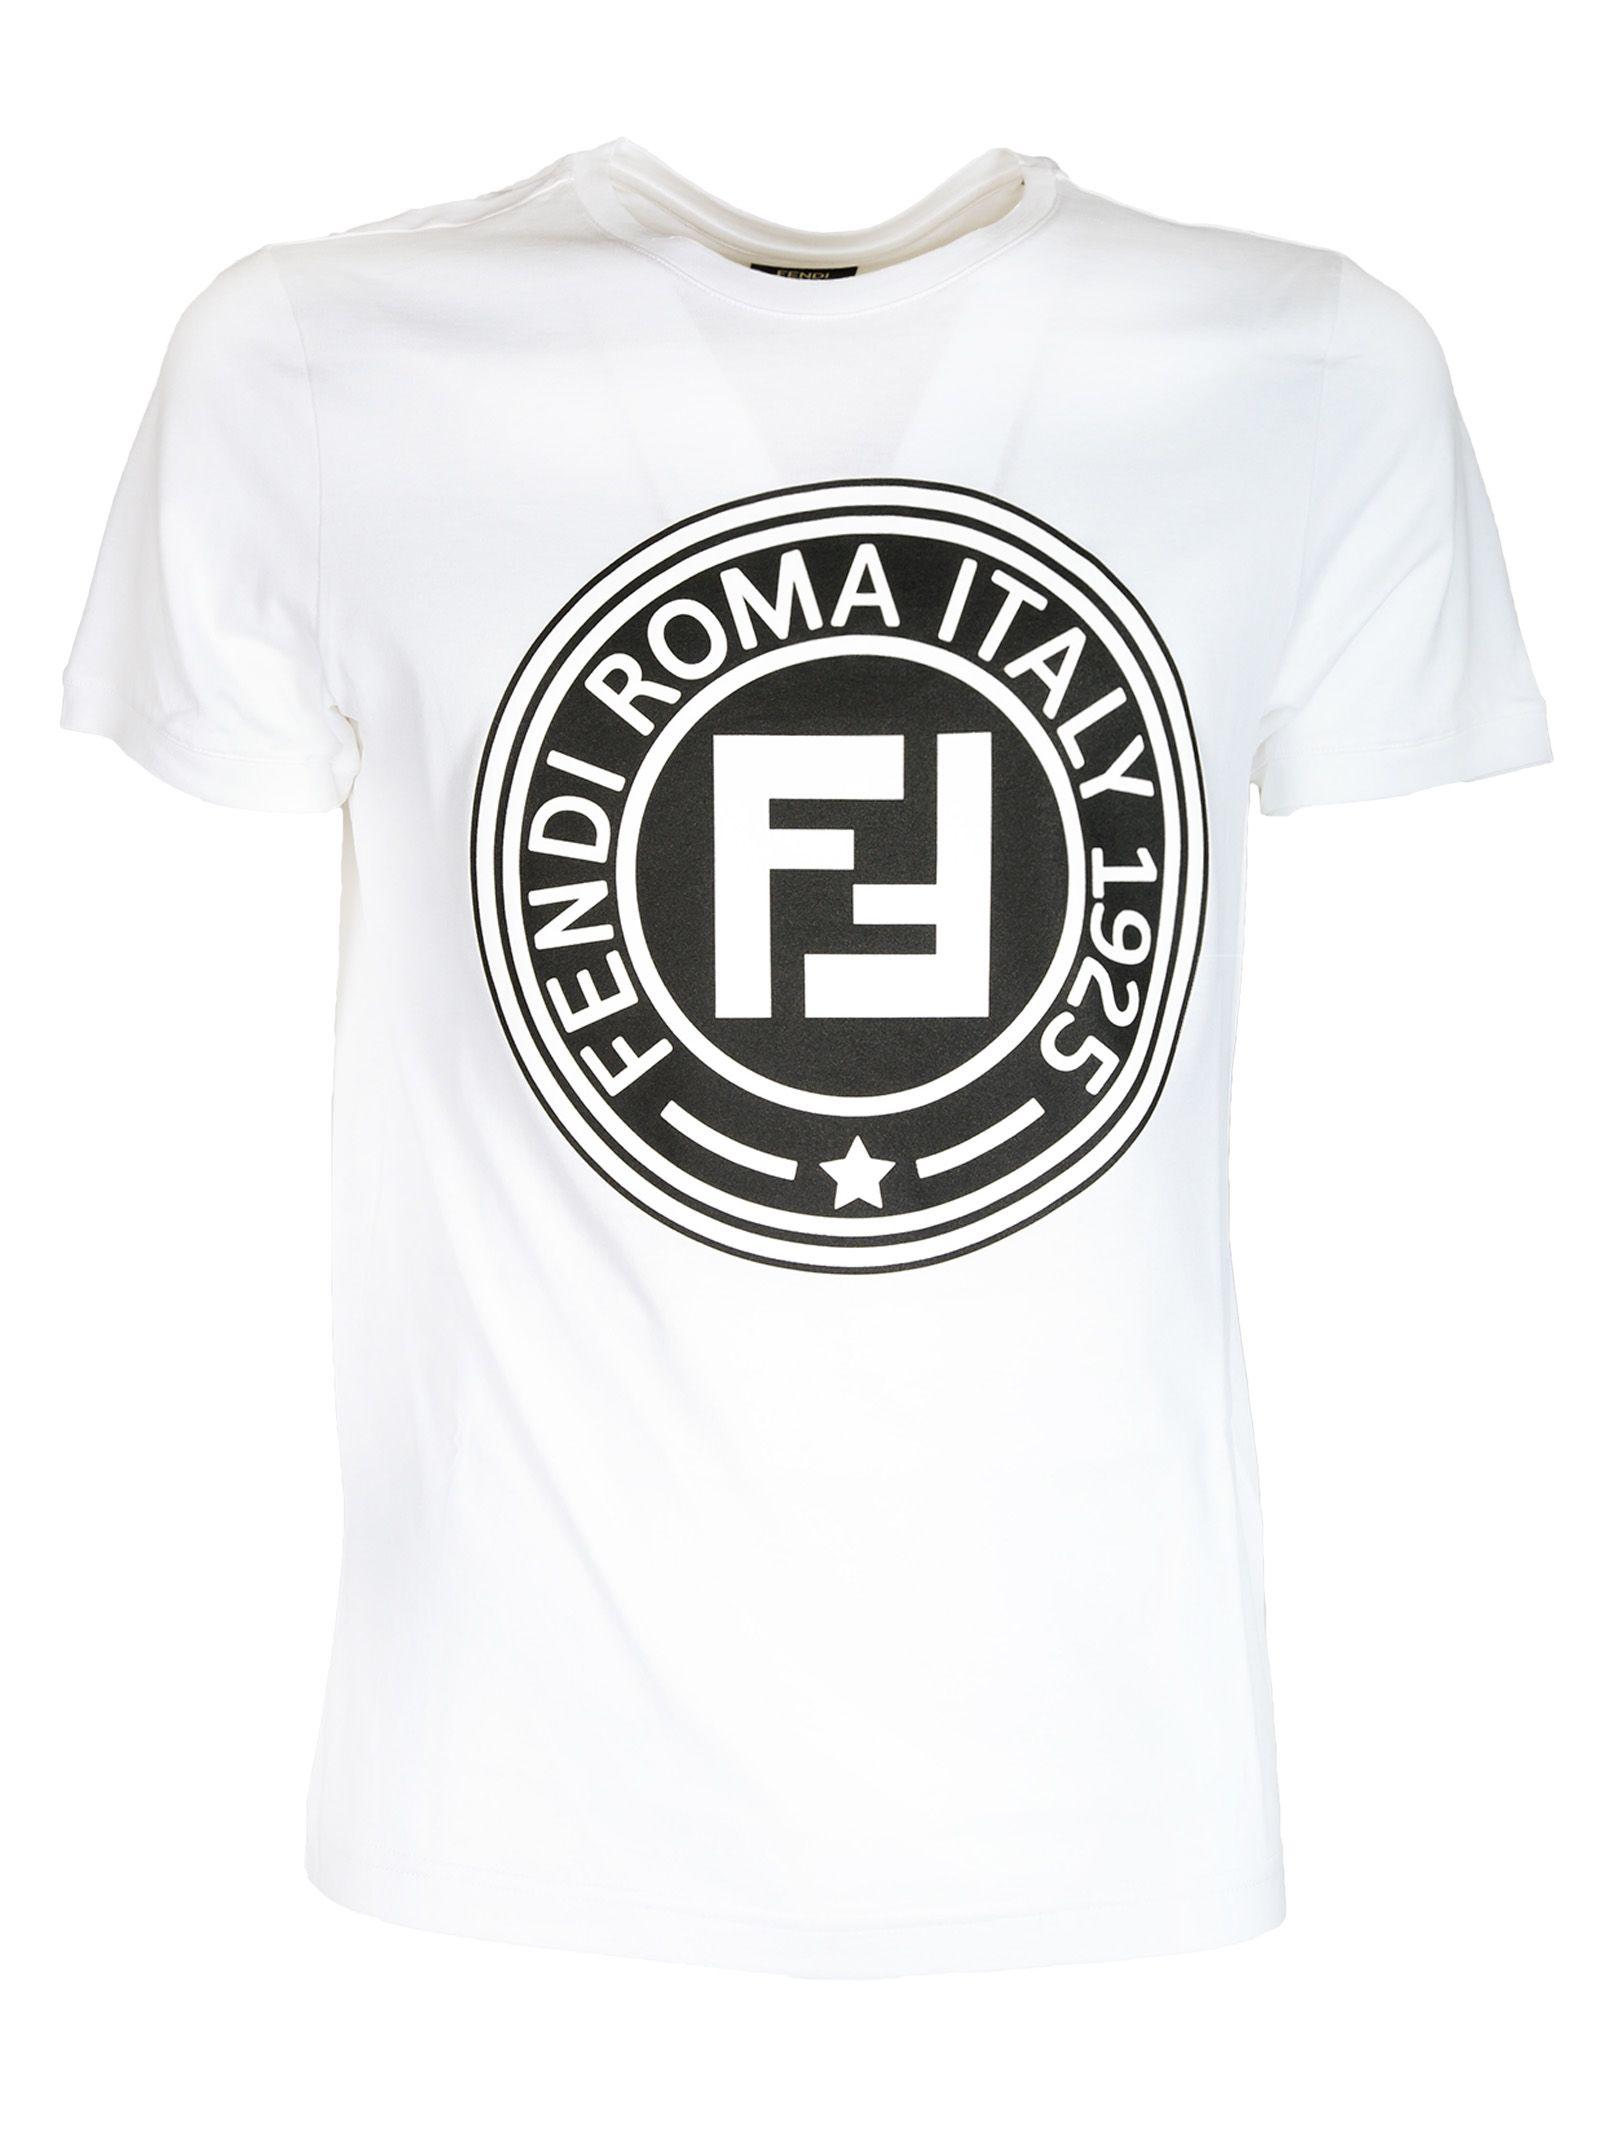 Double F Logo - Fendi Fendi Round Double F Logo T Shirt